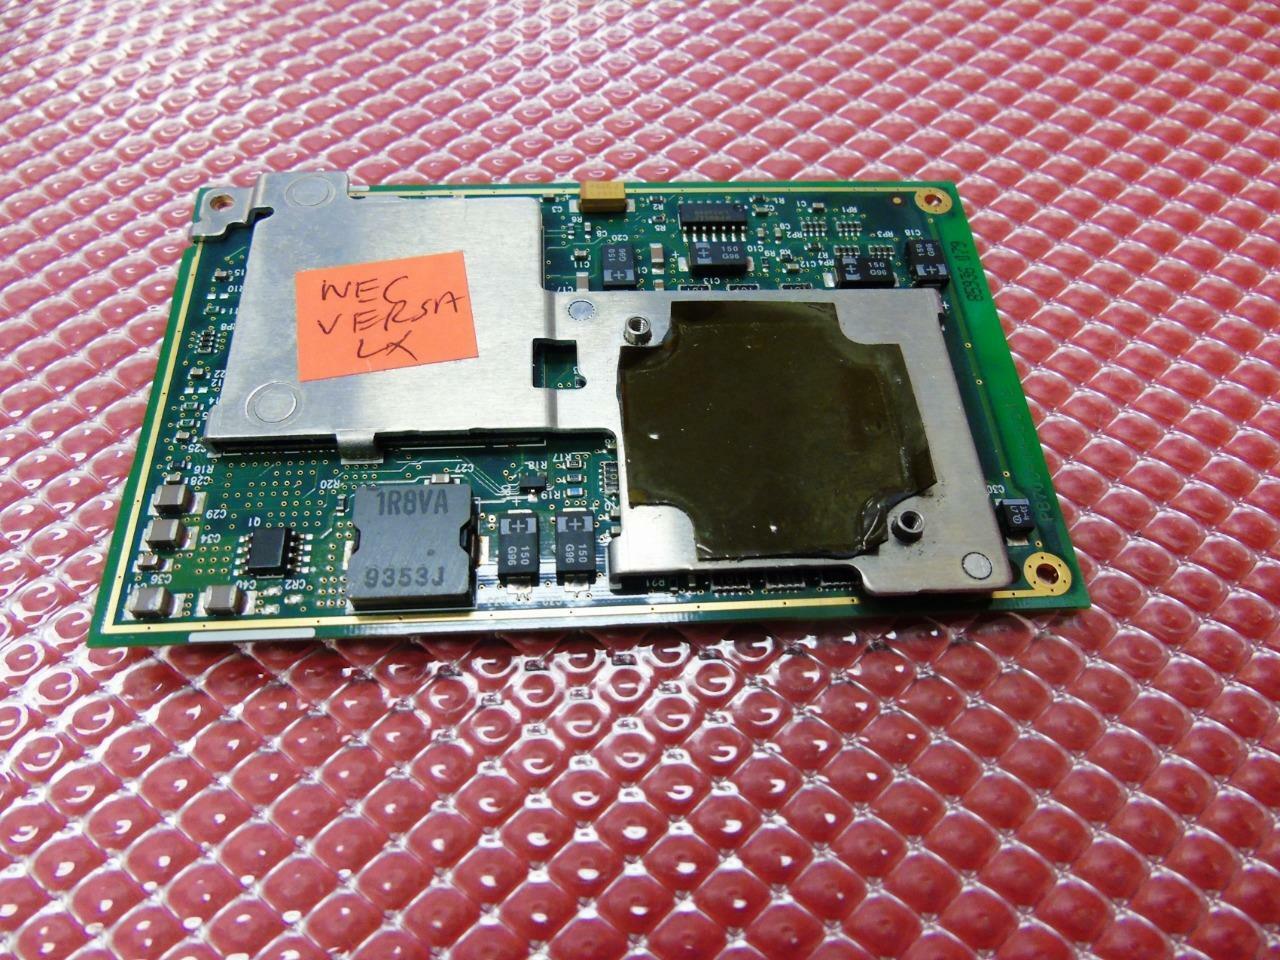 Genuine NEC Versa LX Laptop Intel P-II 266Mhz CPU Processor 724726-403